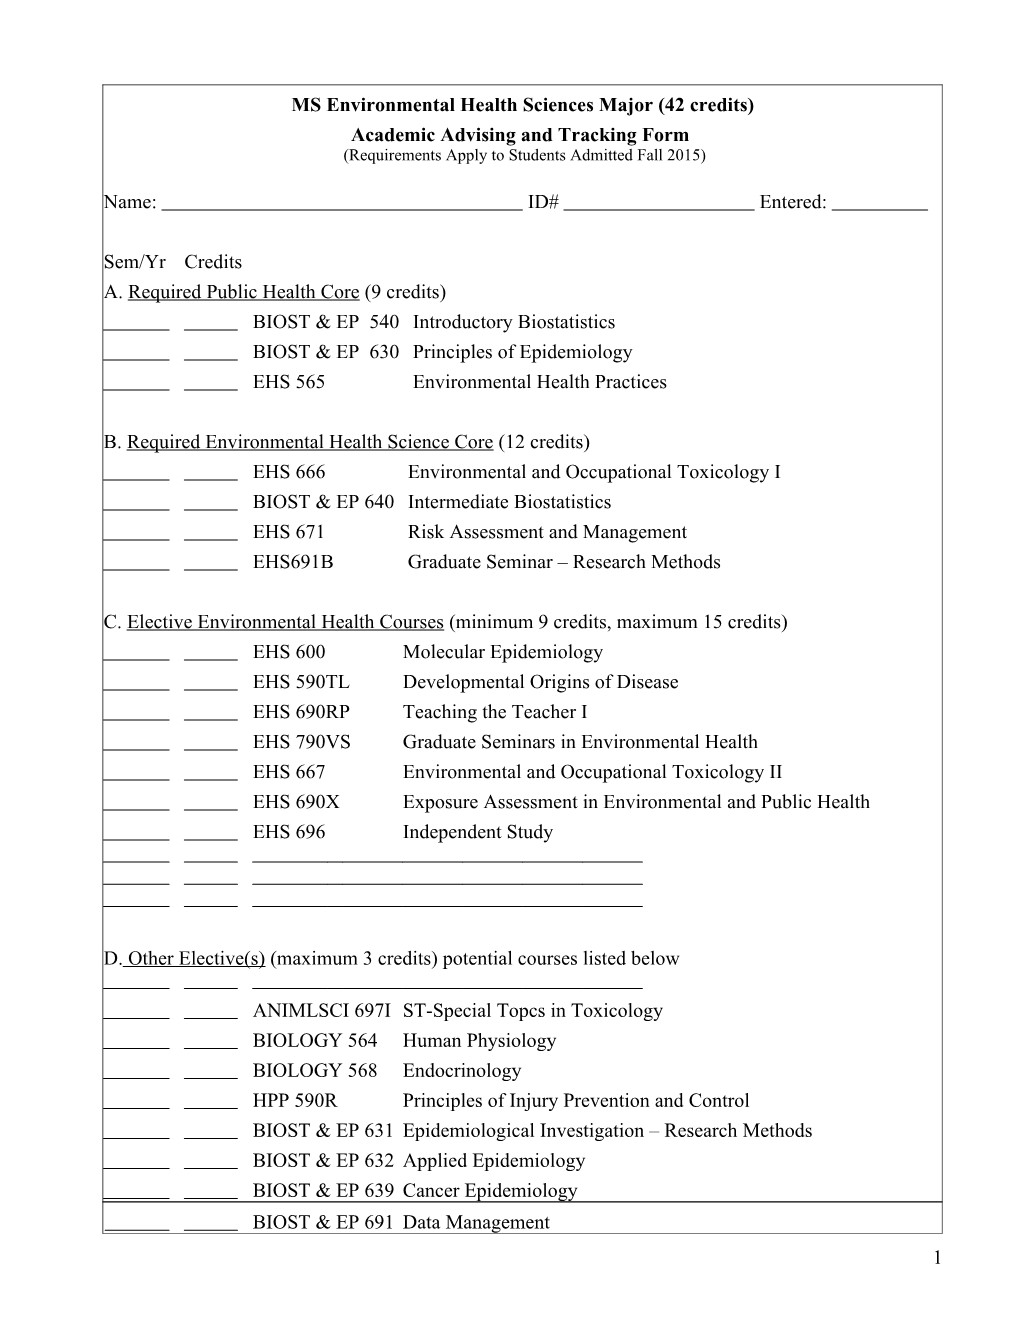 MS Environmental Health Sciences Major (42 Credits)